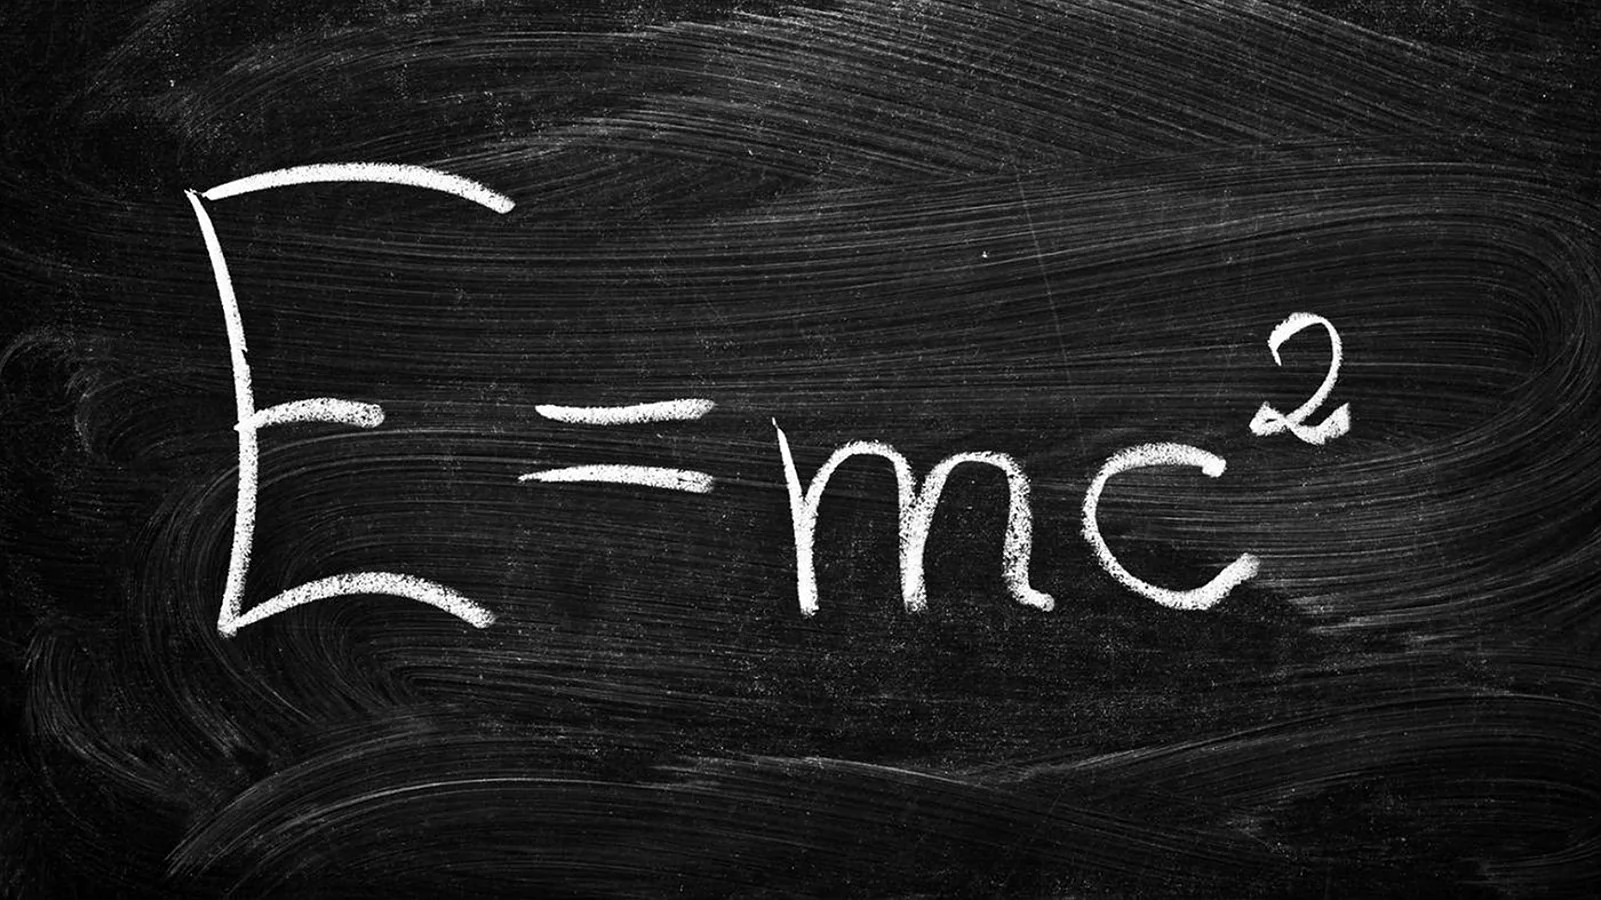 Формула Эйнштейна e mc2